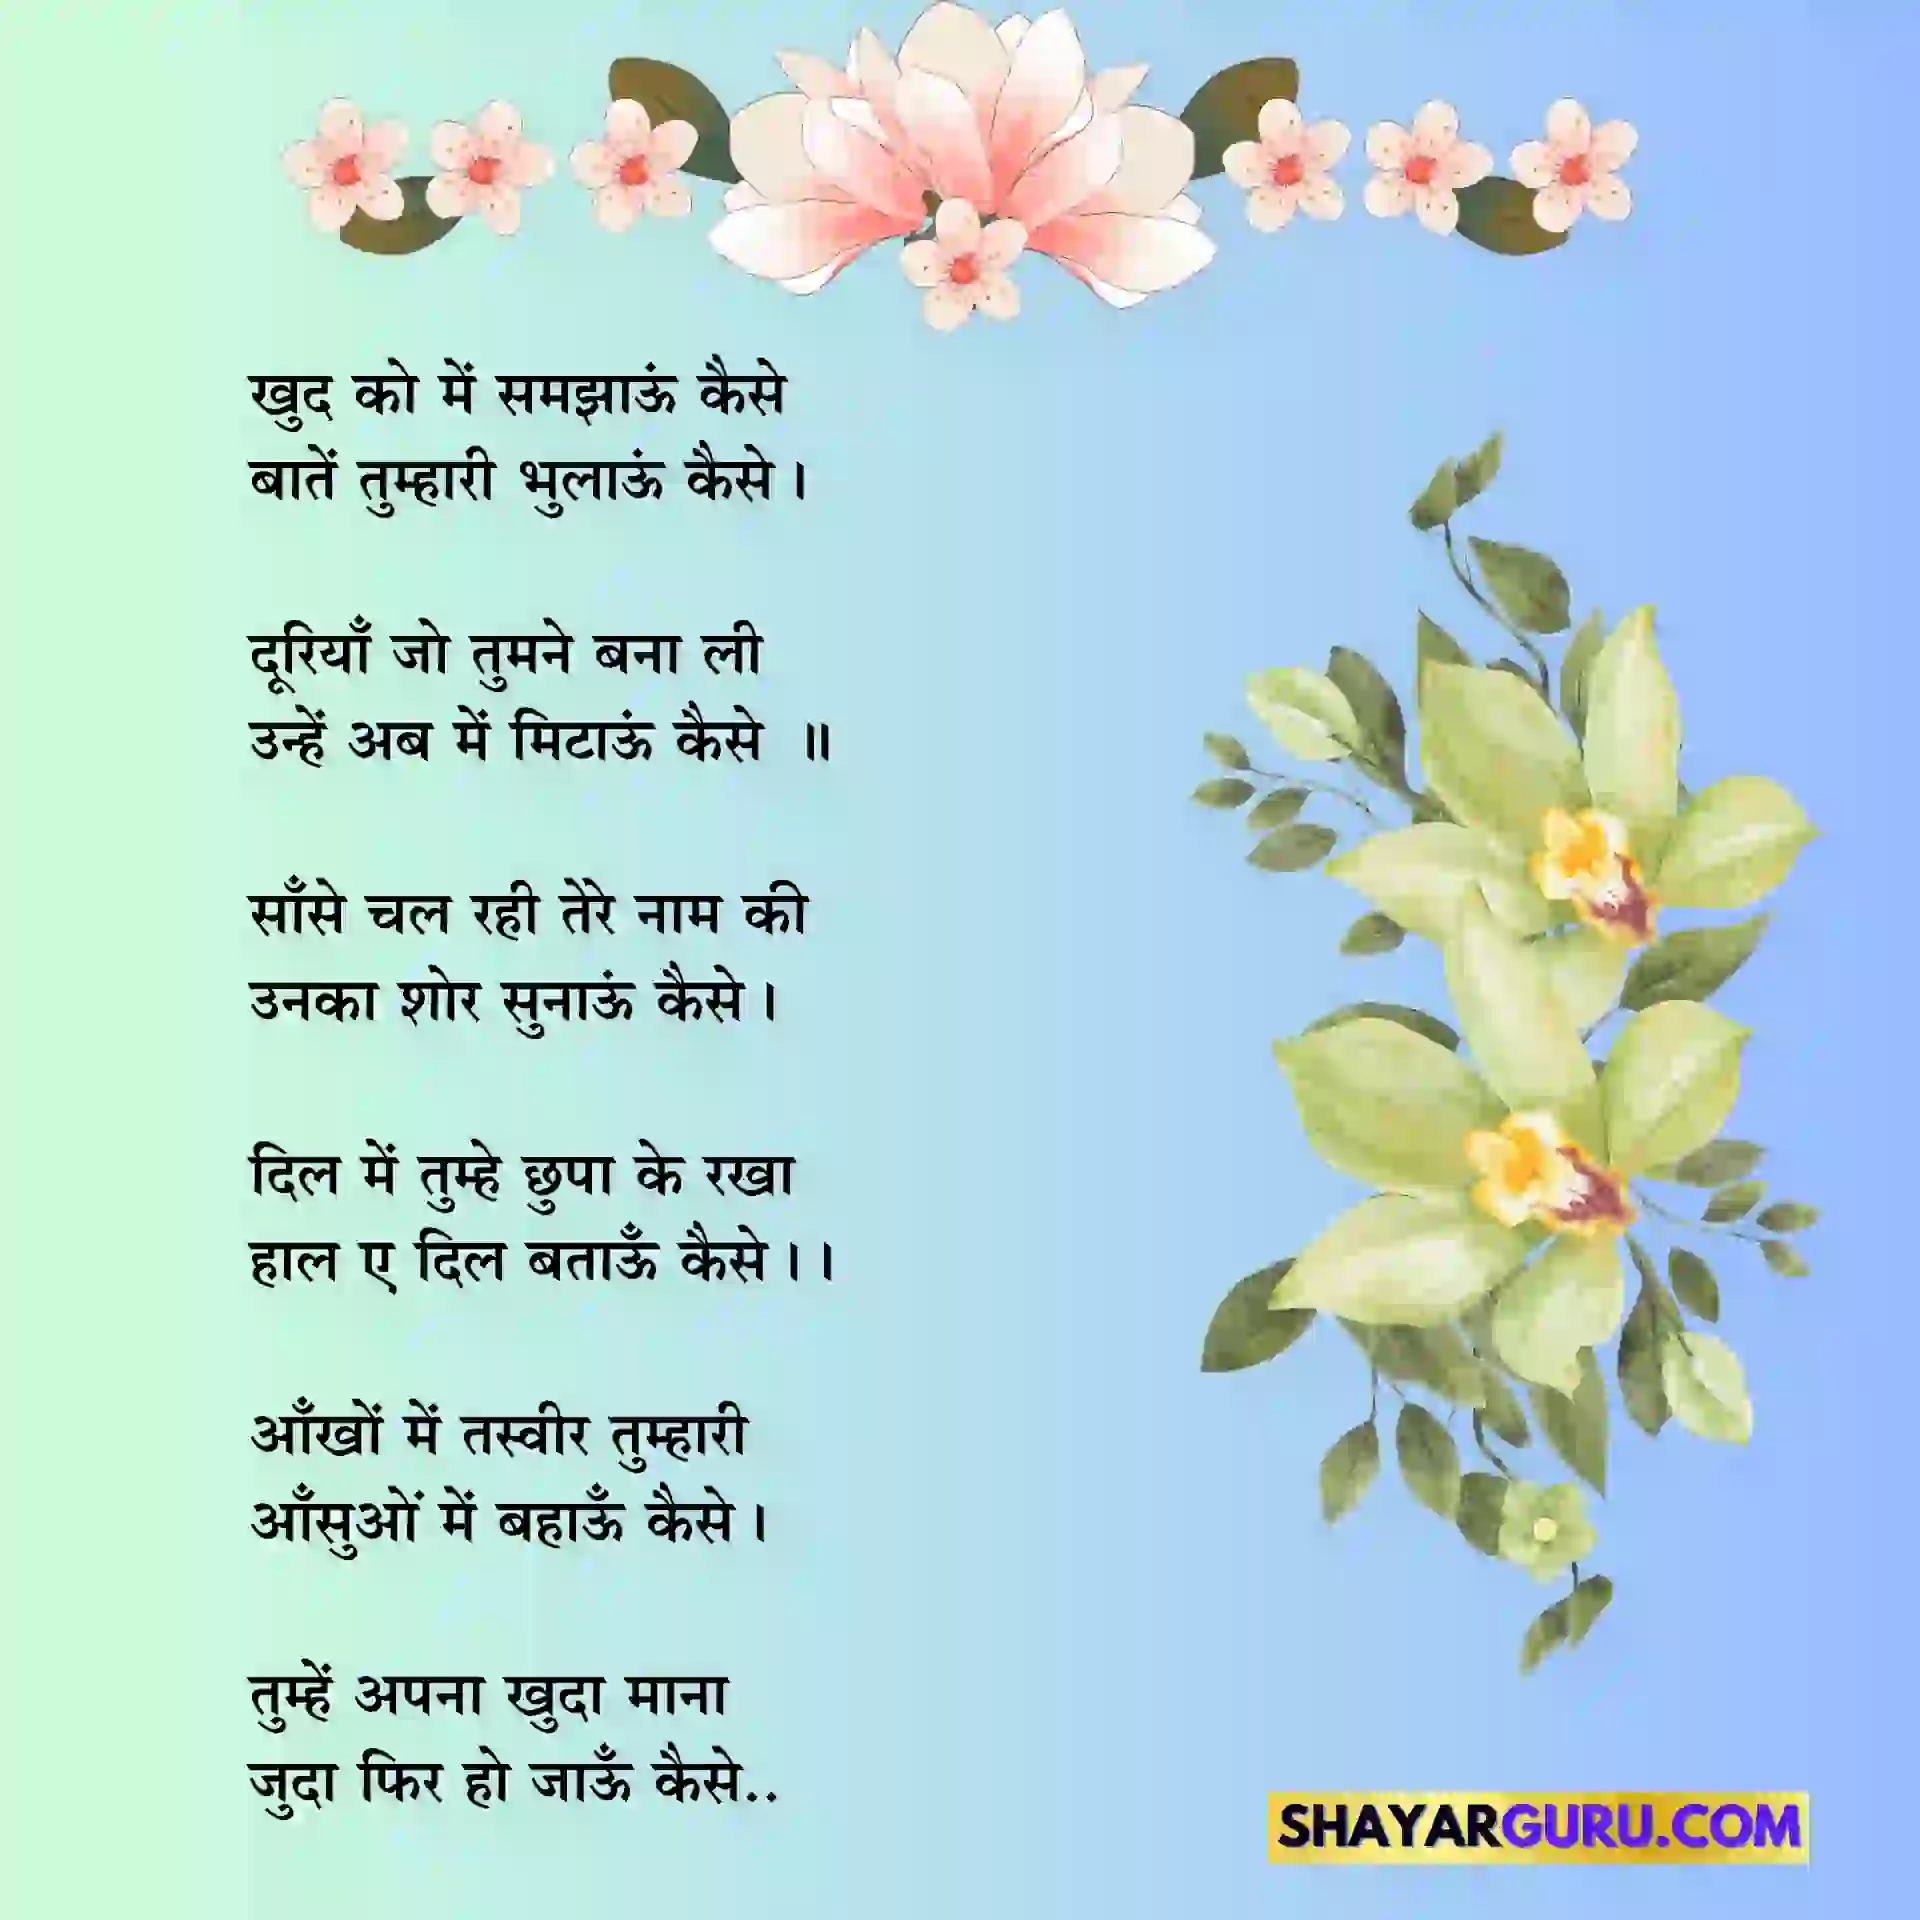 Hindi Poems On Life Inspiration